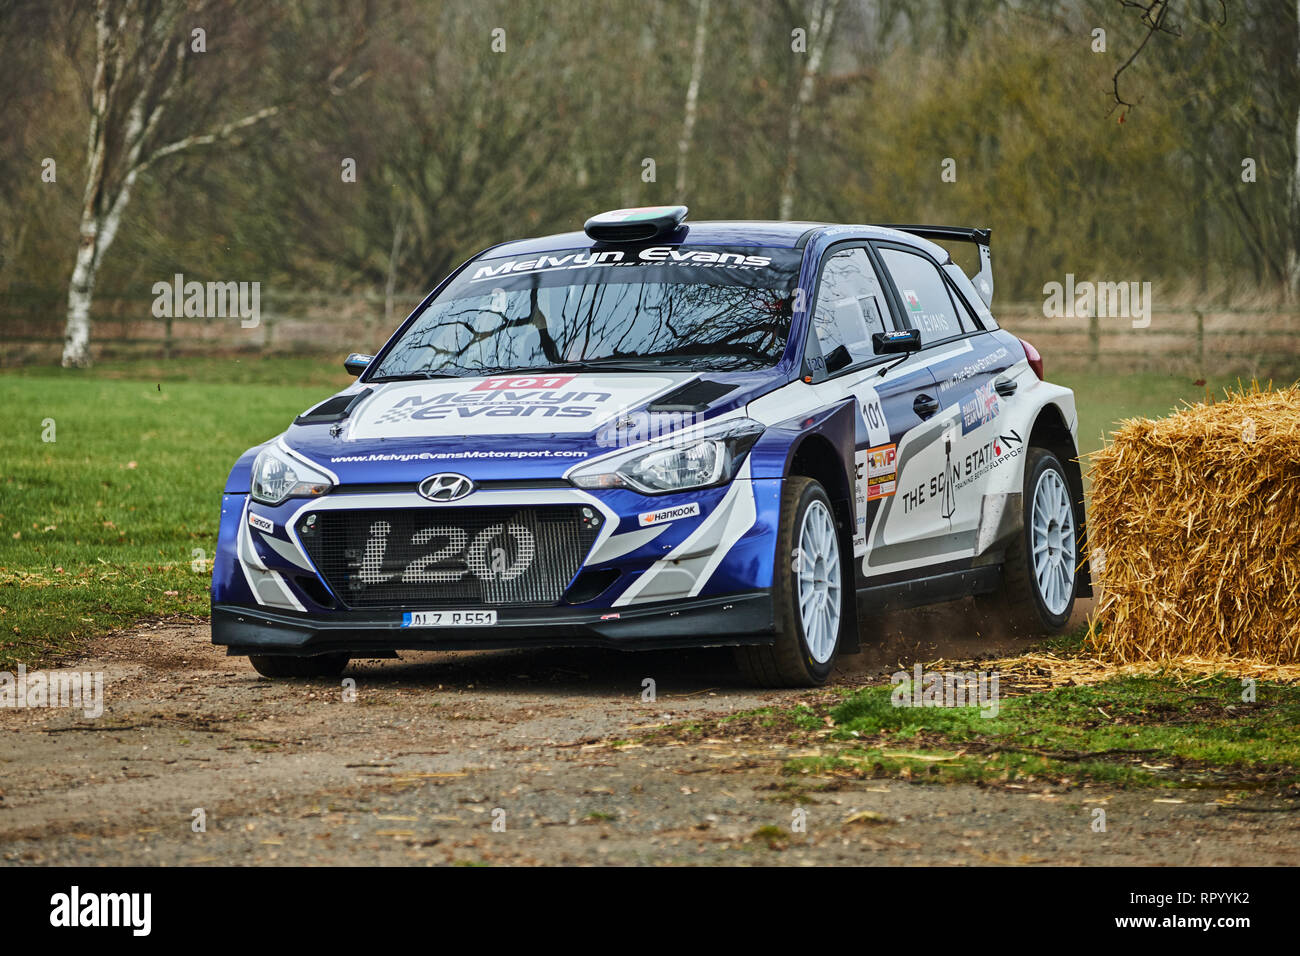 Hyundai i20 rally car hi-res stock photography and images - Alamy